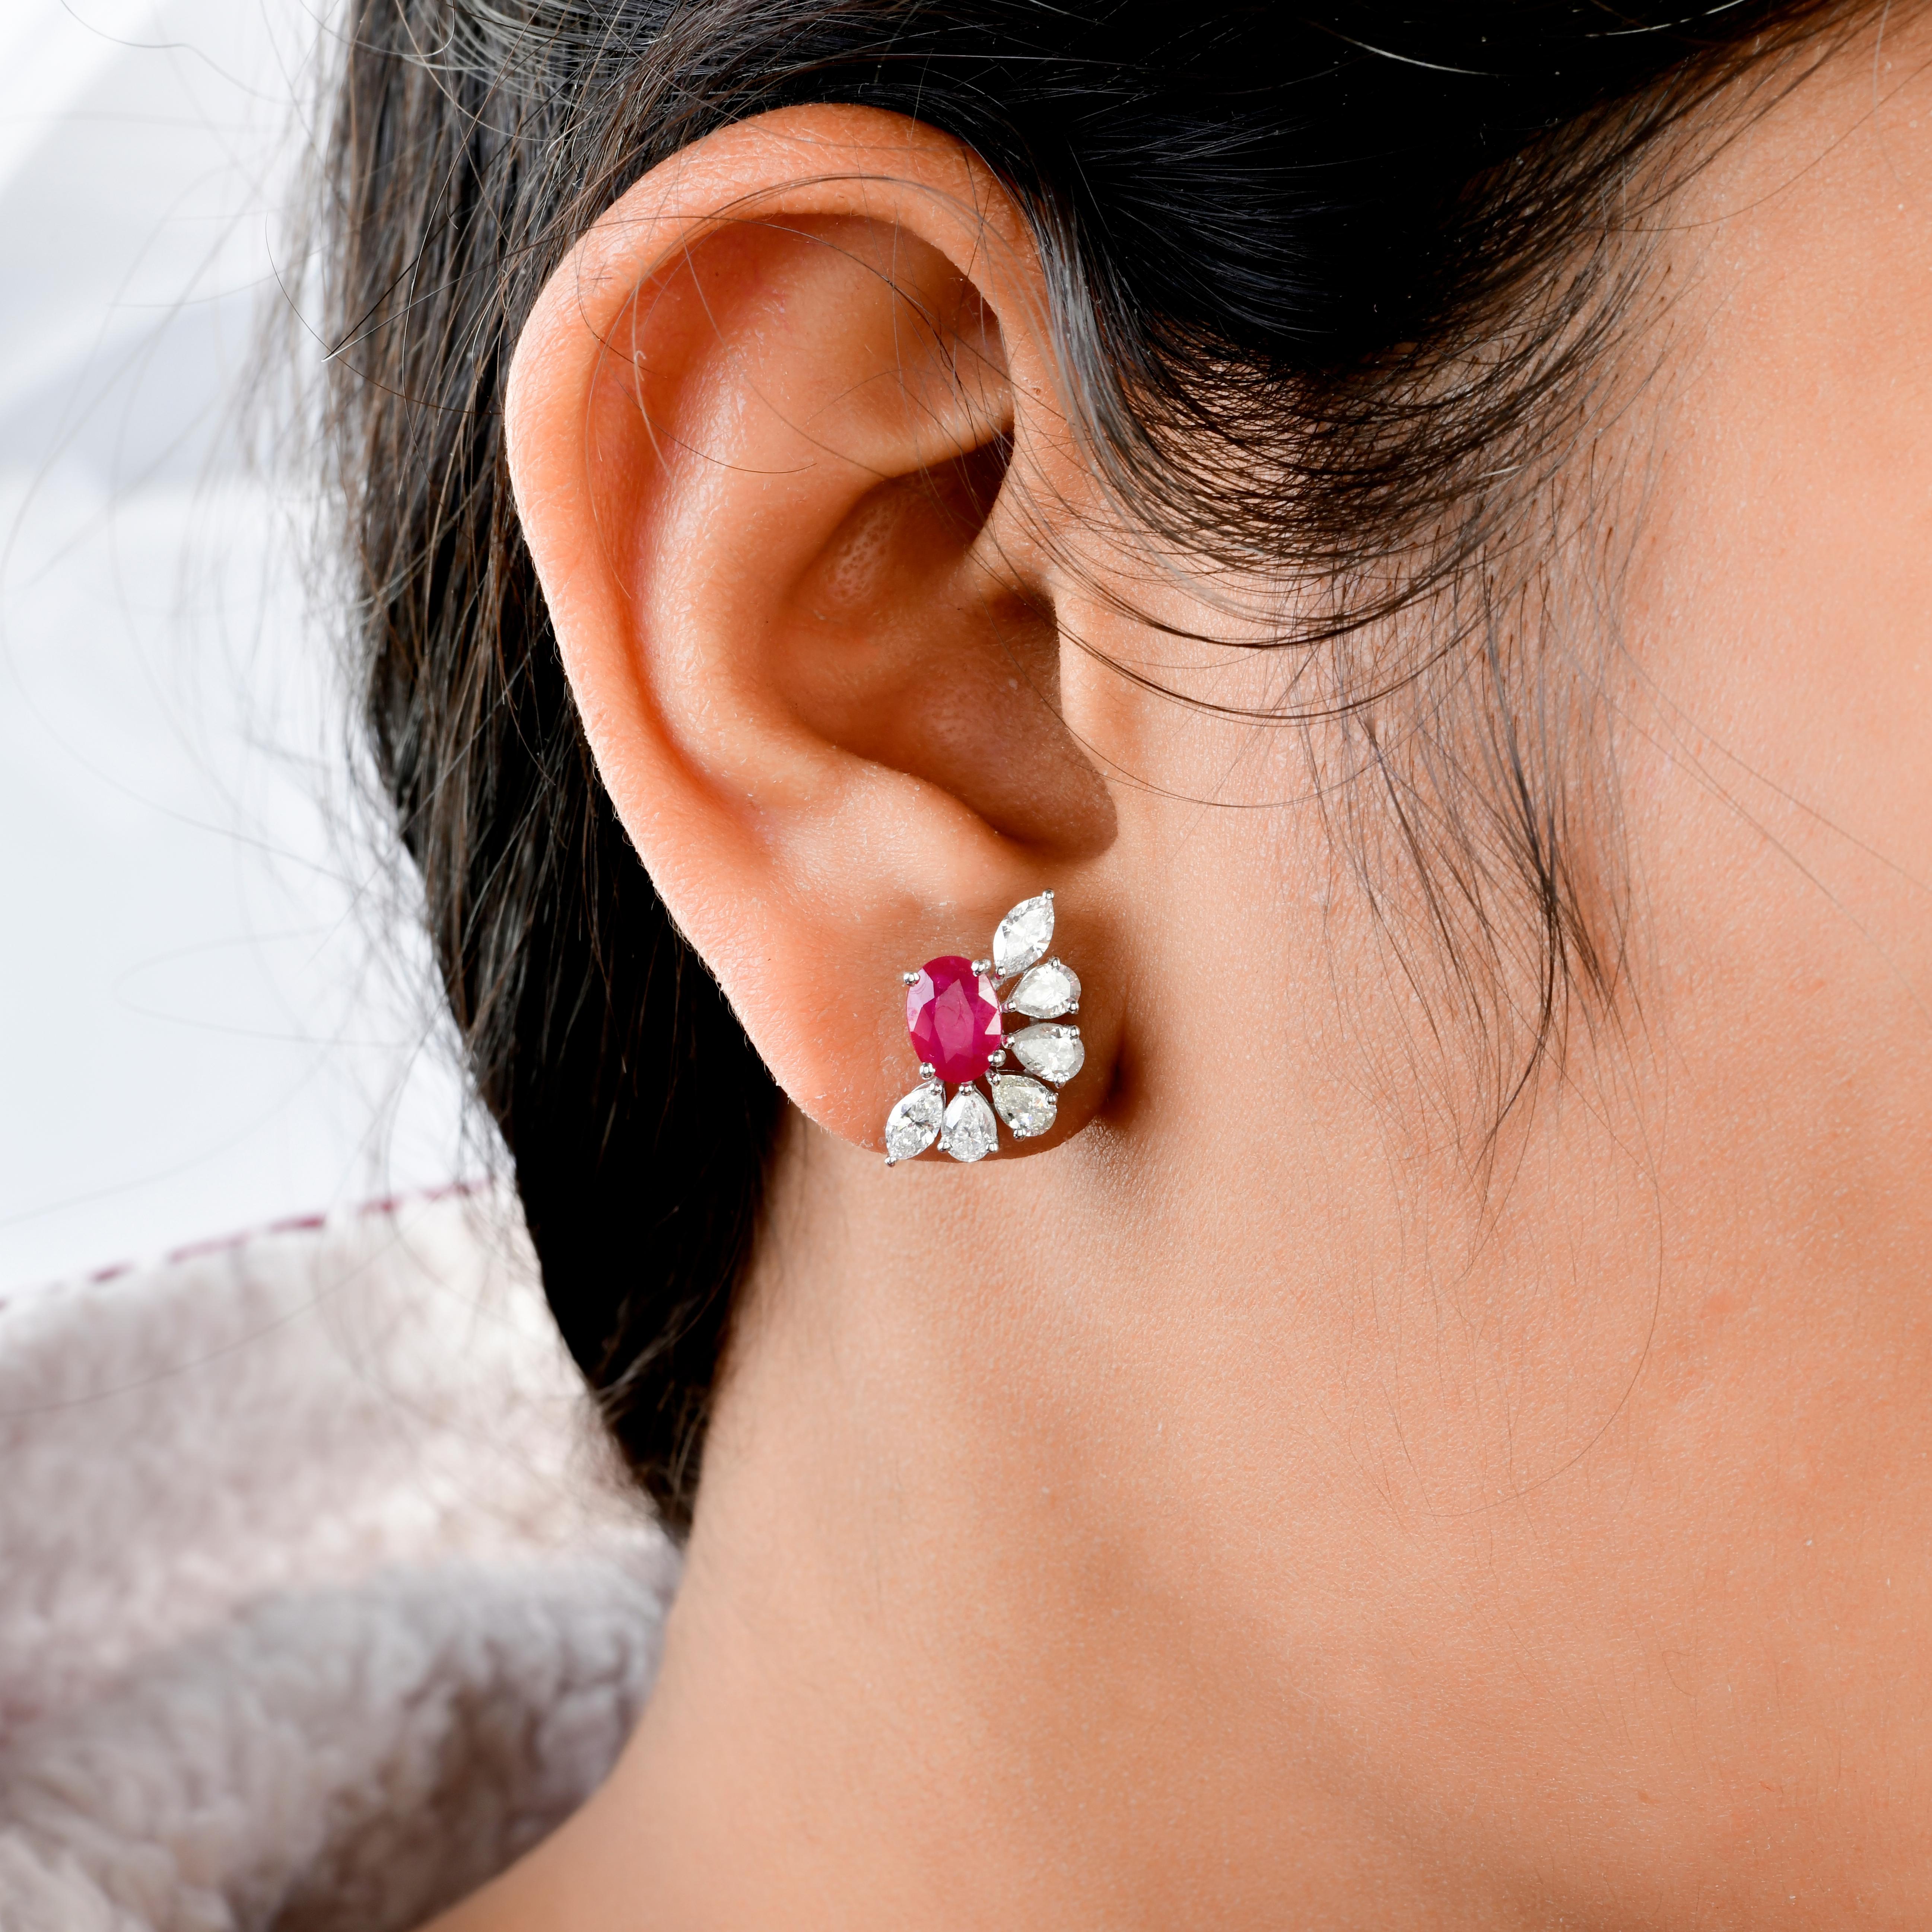 Oval Cut Natural Oval Ruby Gemstone Stud Earrings Diamond 14 Karat White Gold Jewelry For Sale